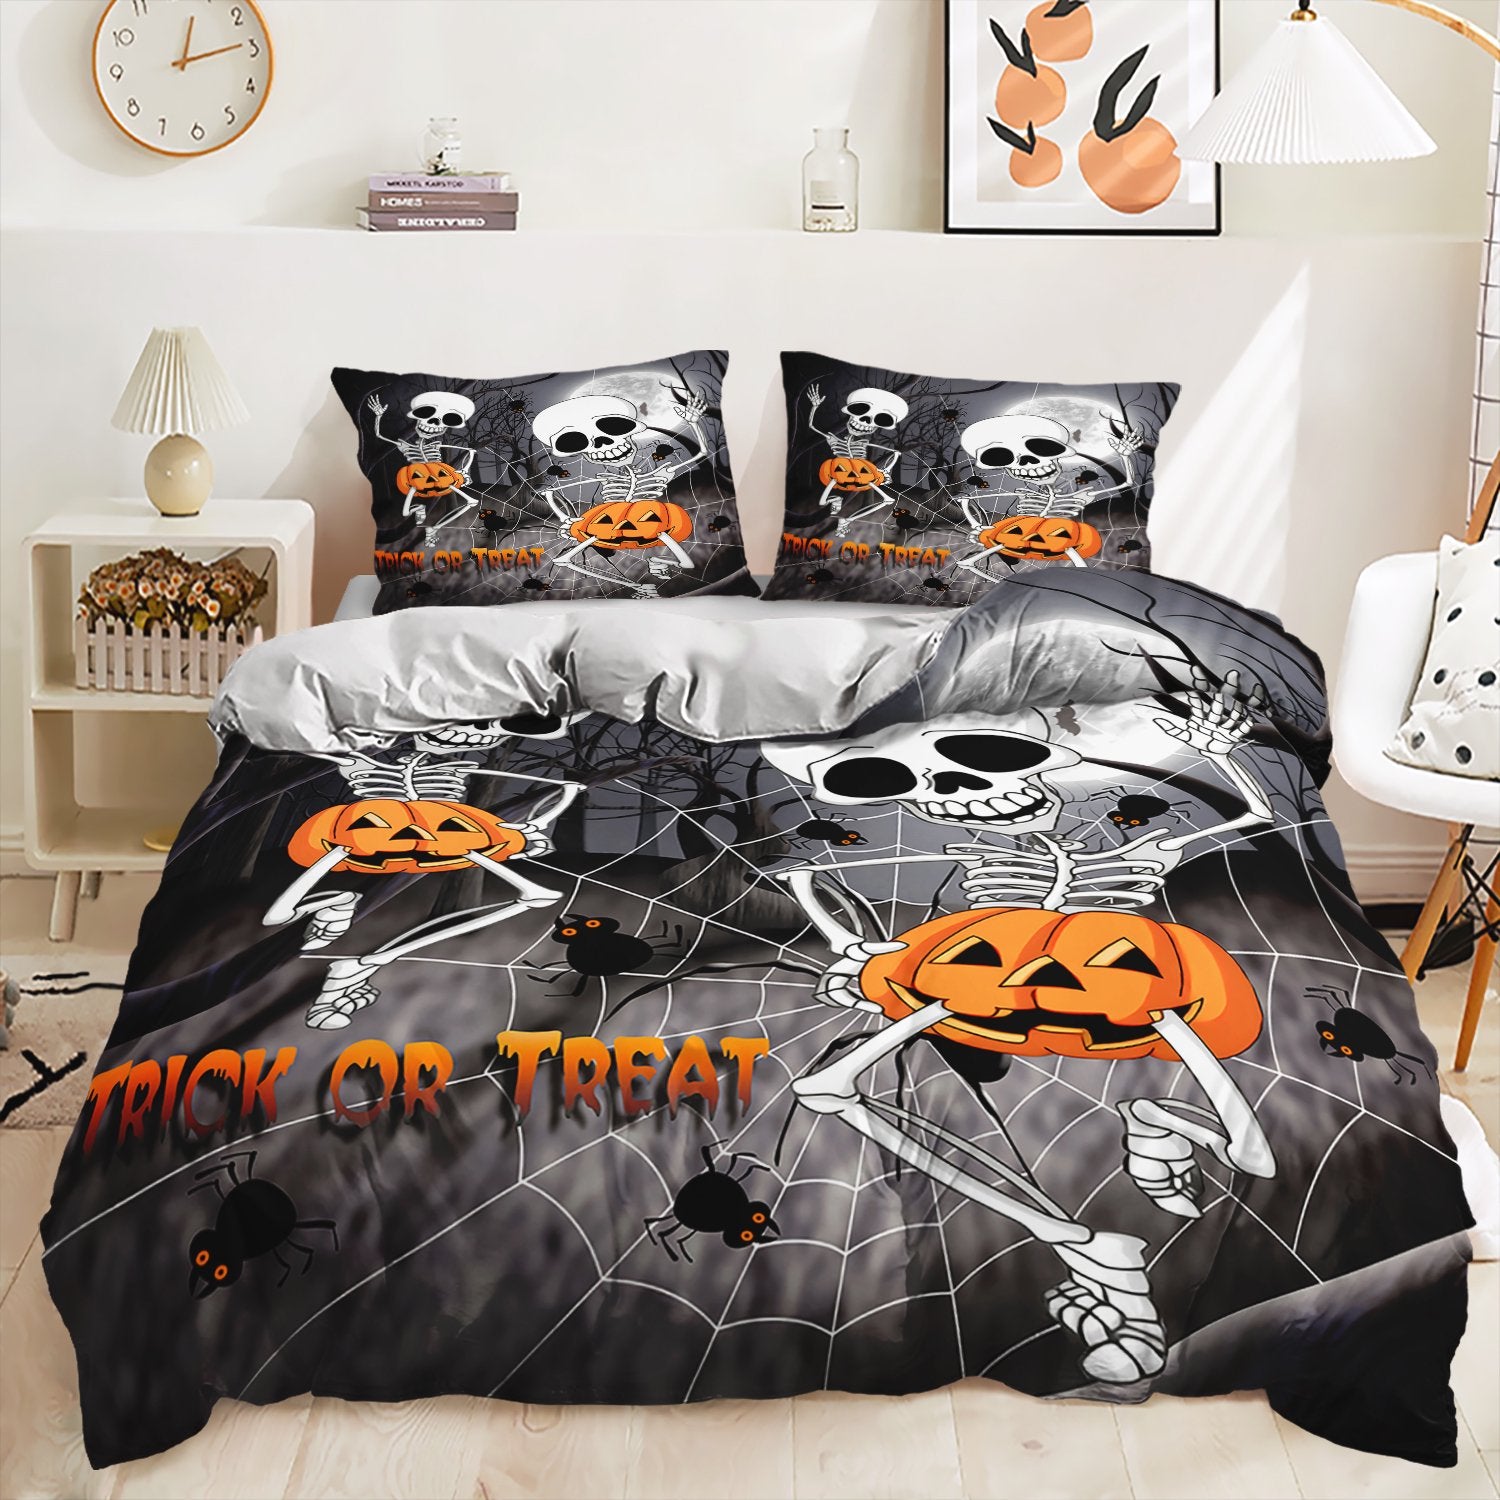 Skeleton Halloween bed set